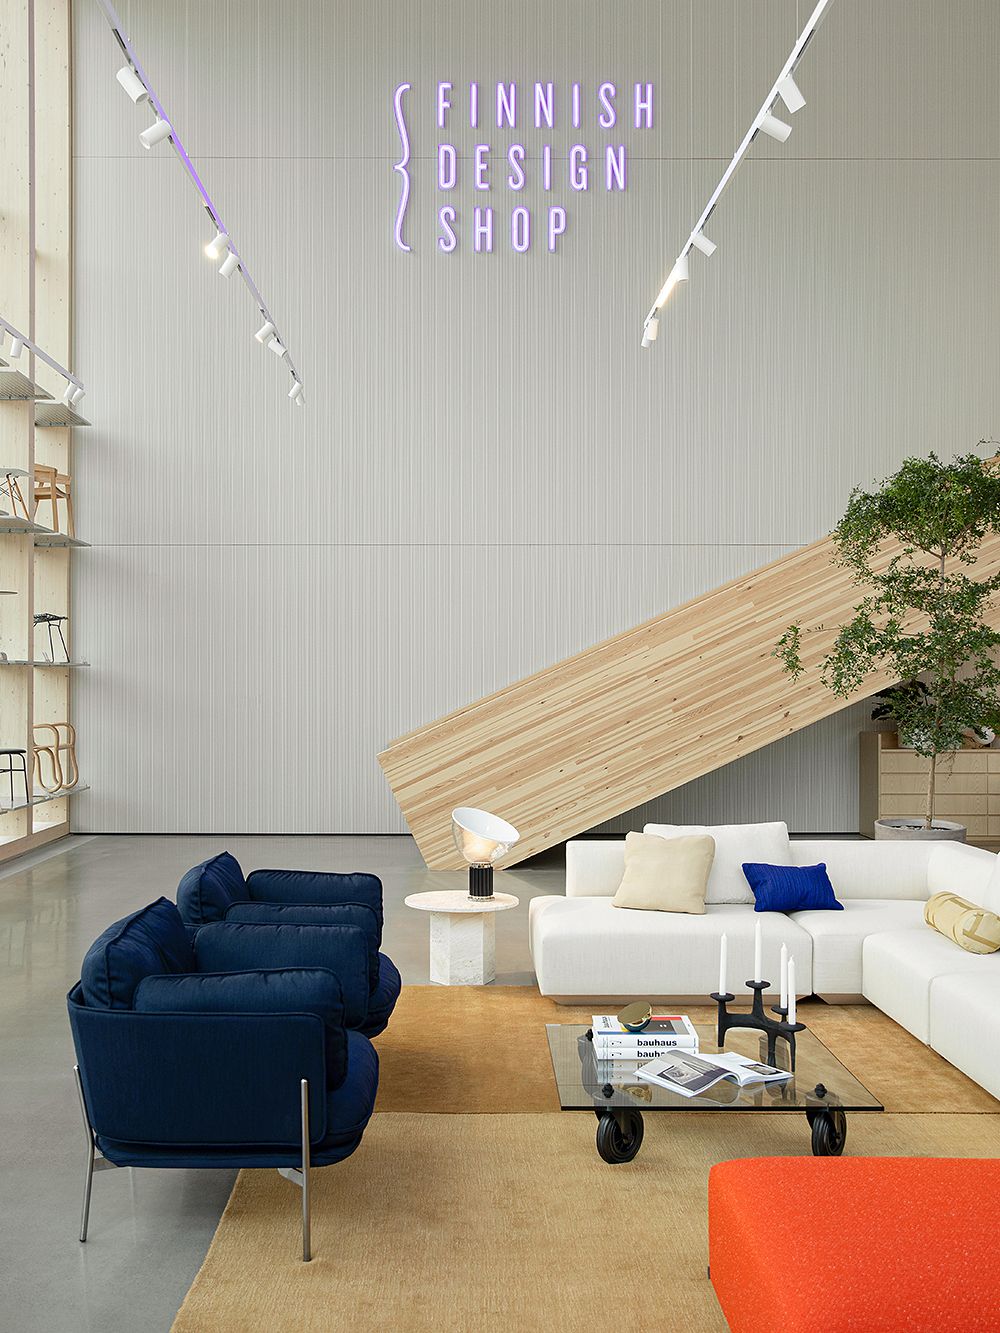 Finnish Design Shop showroom